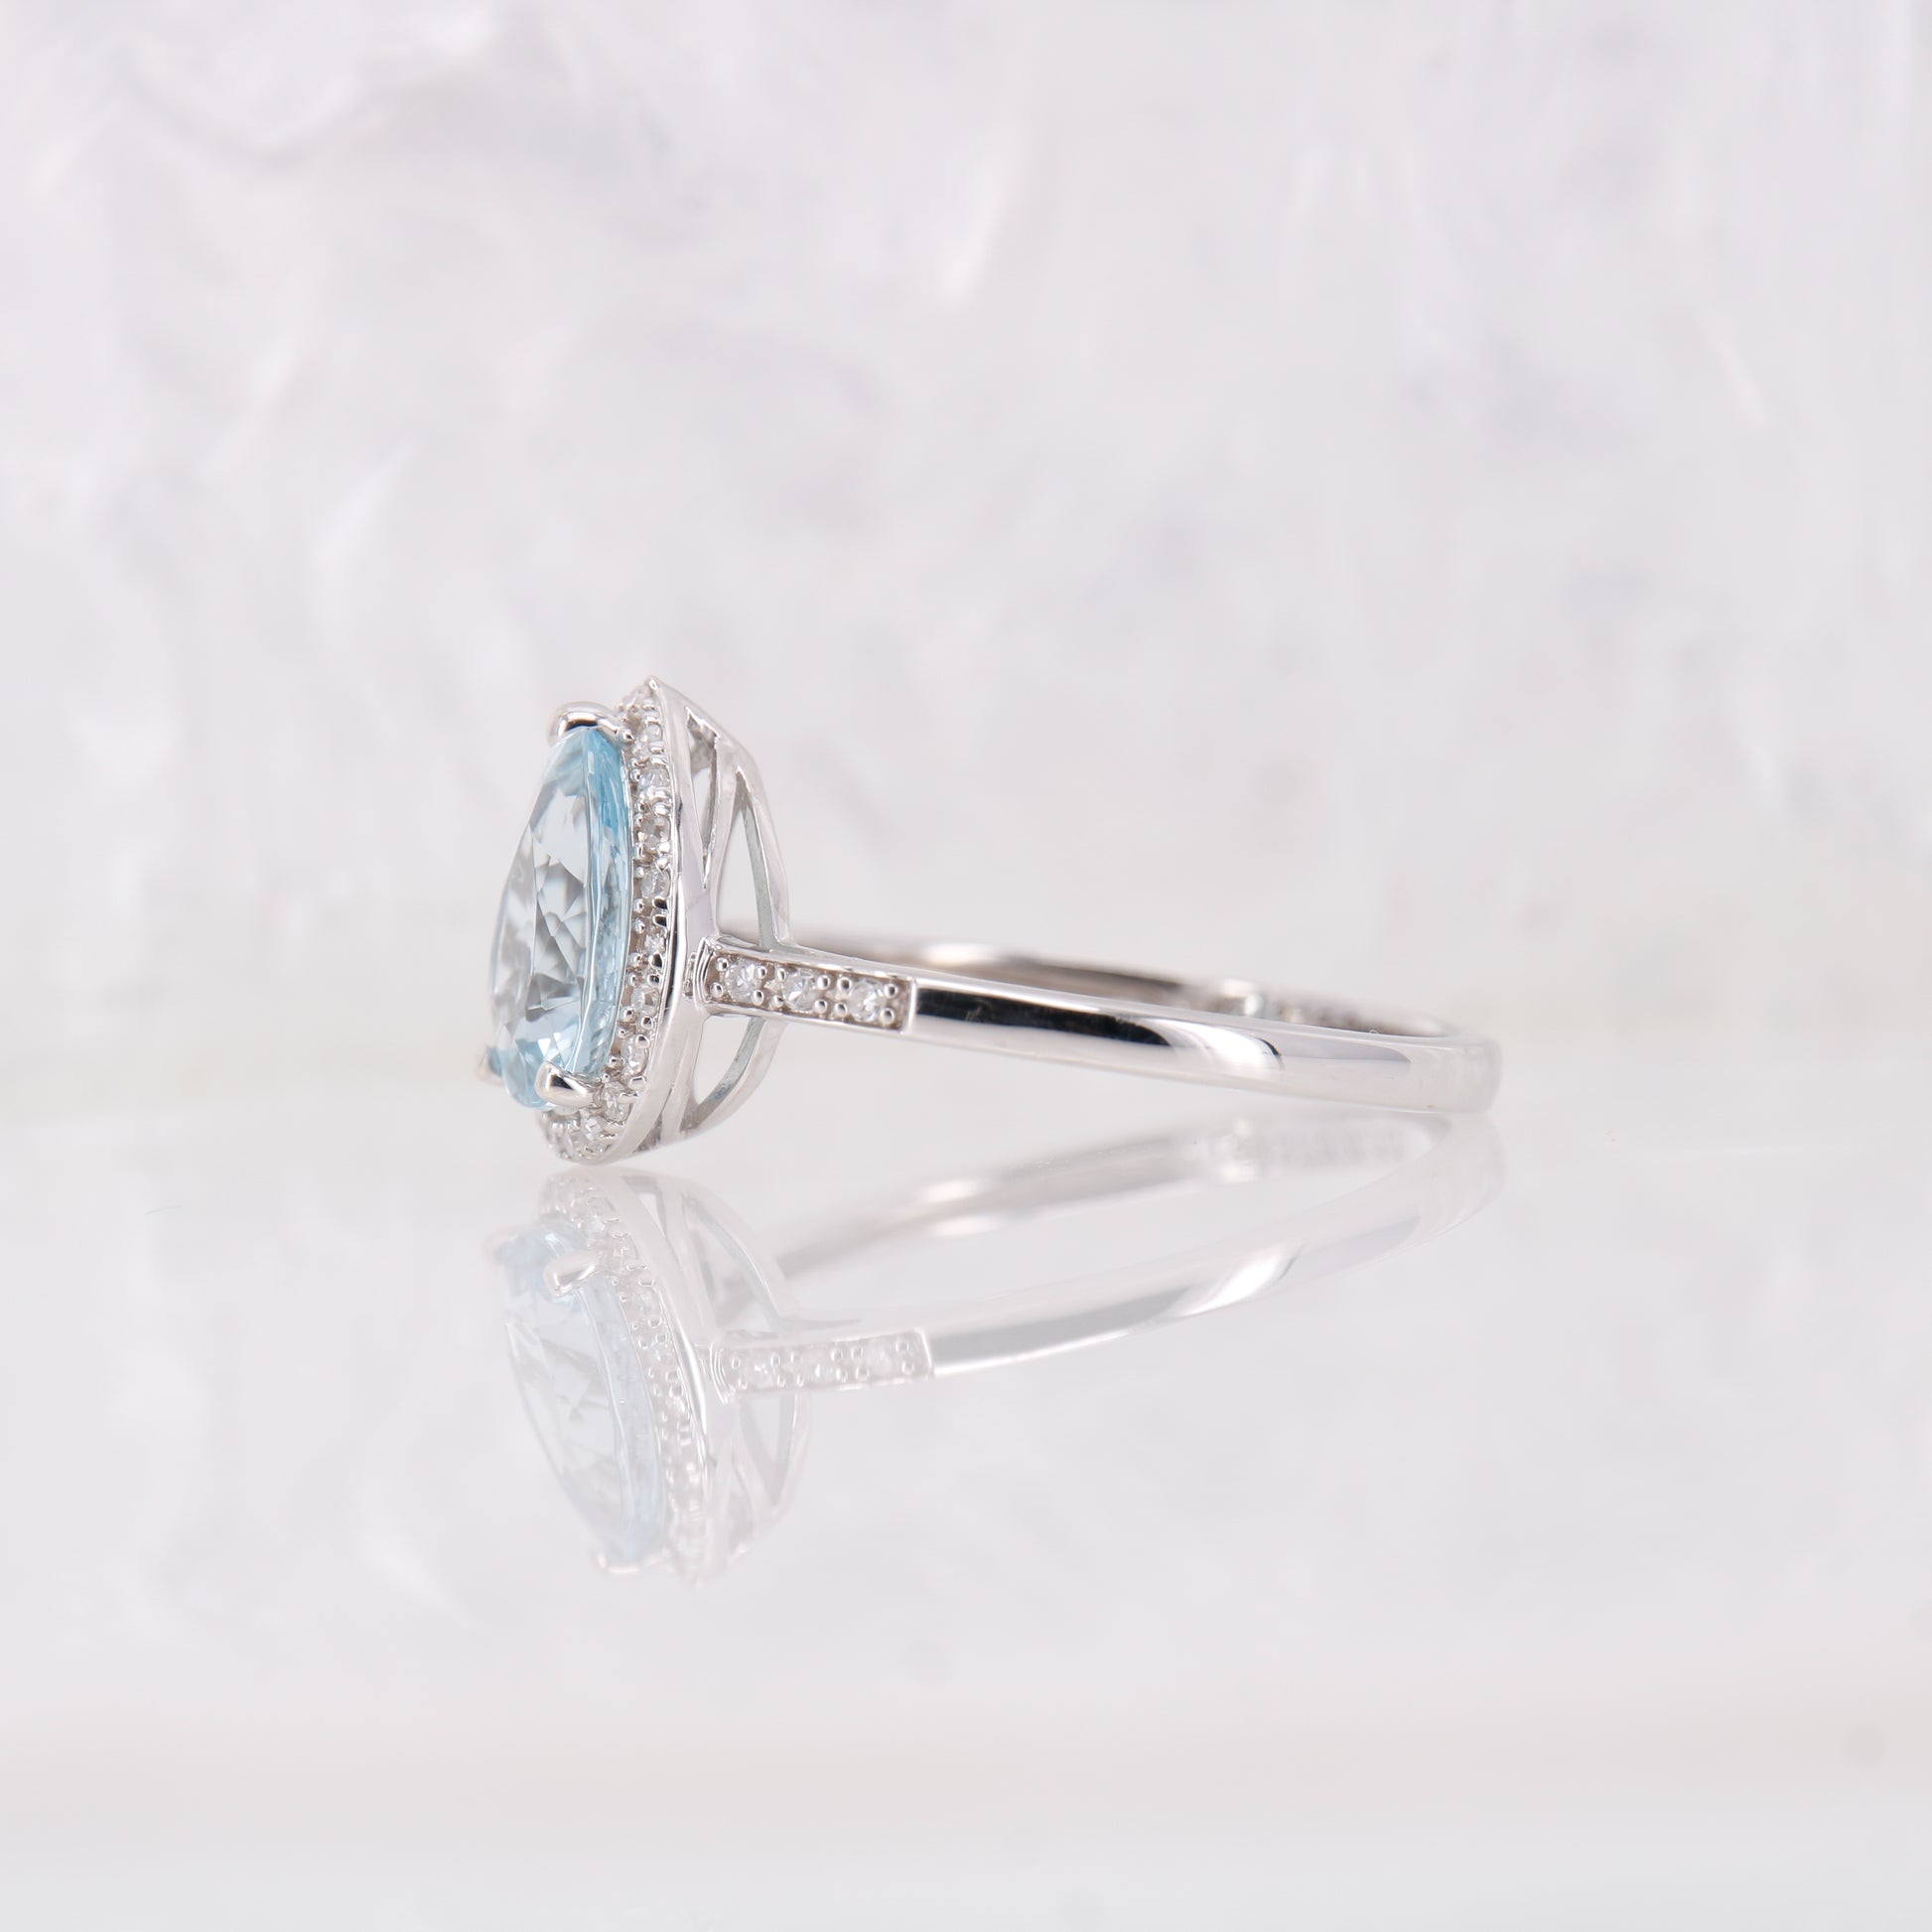 Secondhand Aquamarine and Diamond Ring 9ct White Gold, pear cut aquamarine gemstone.